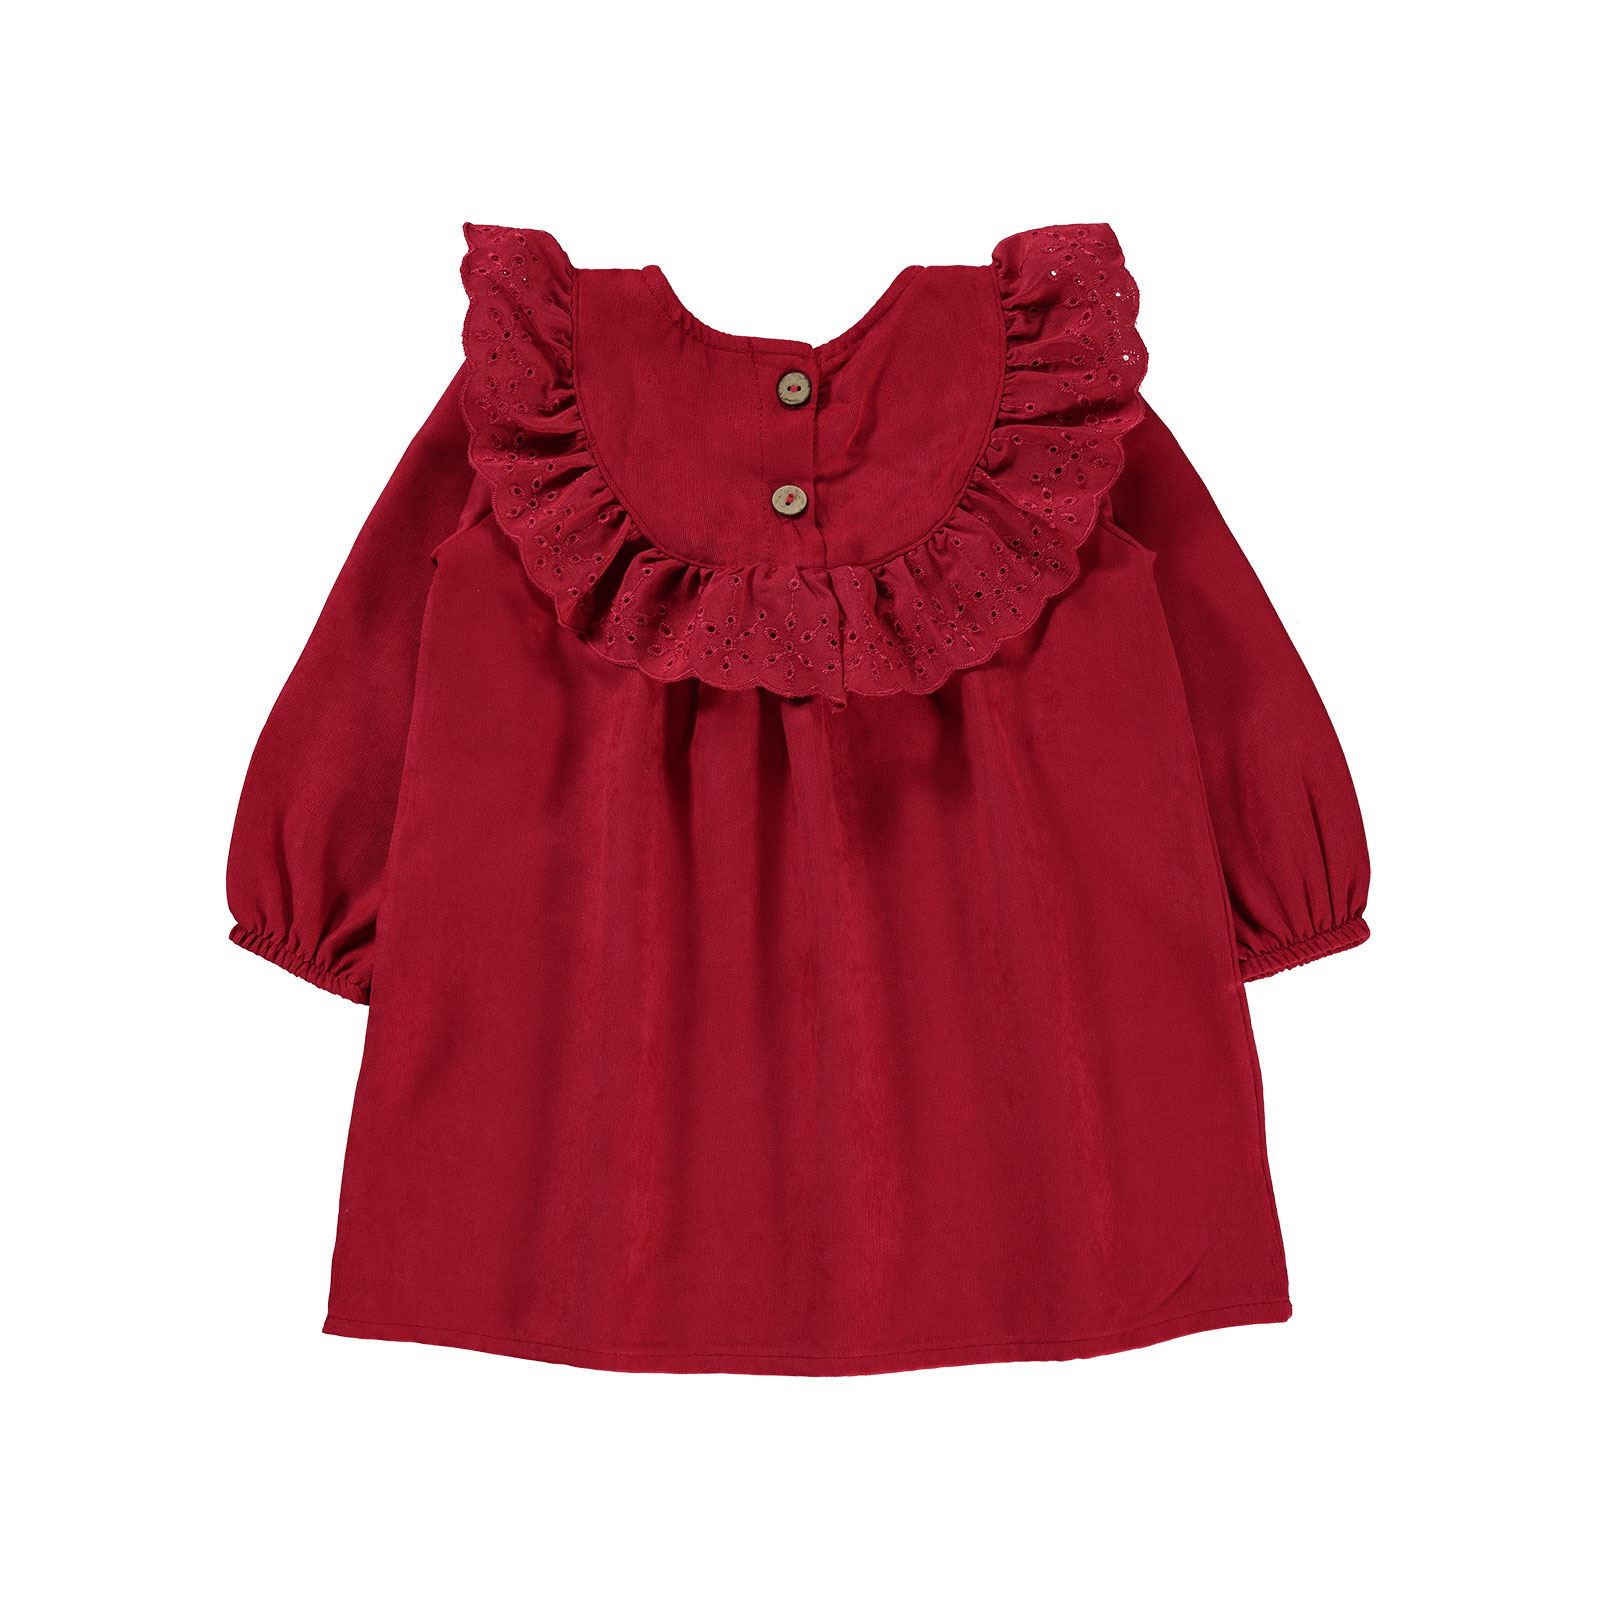 Civil Baby Kız Bebek Elbise 9-18 Ay Kırmızı